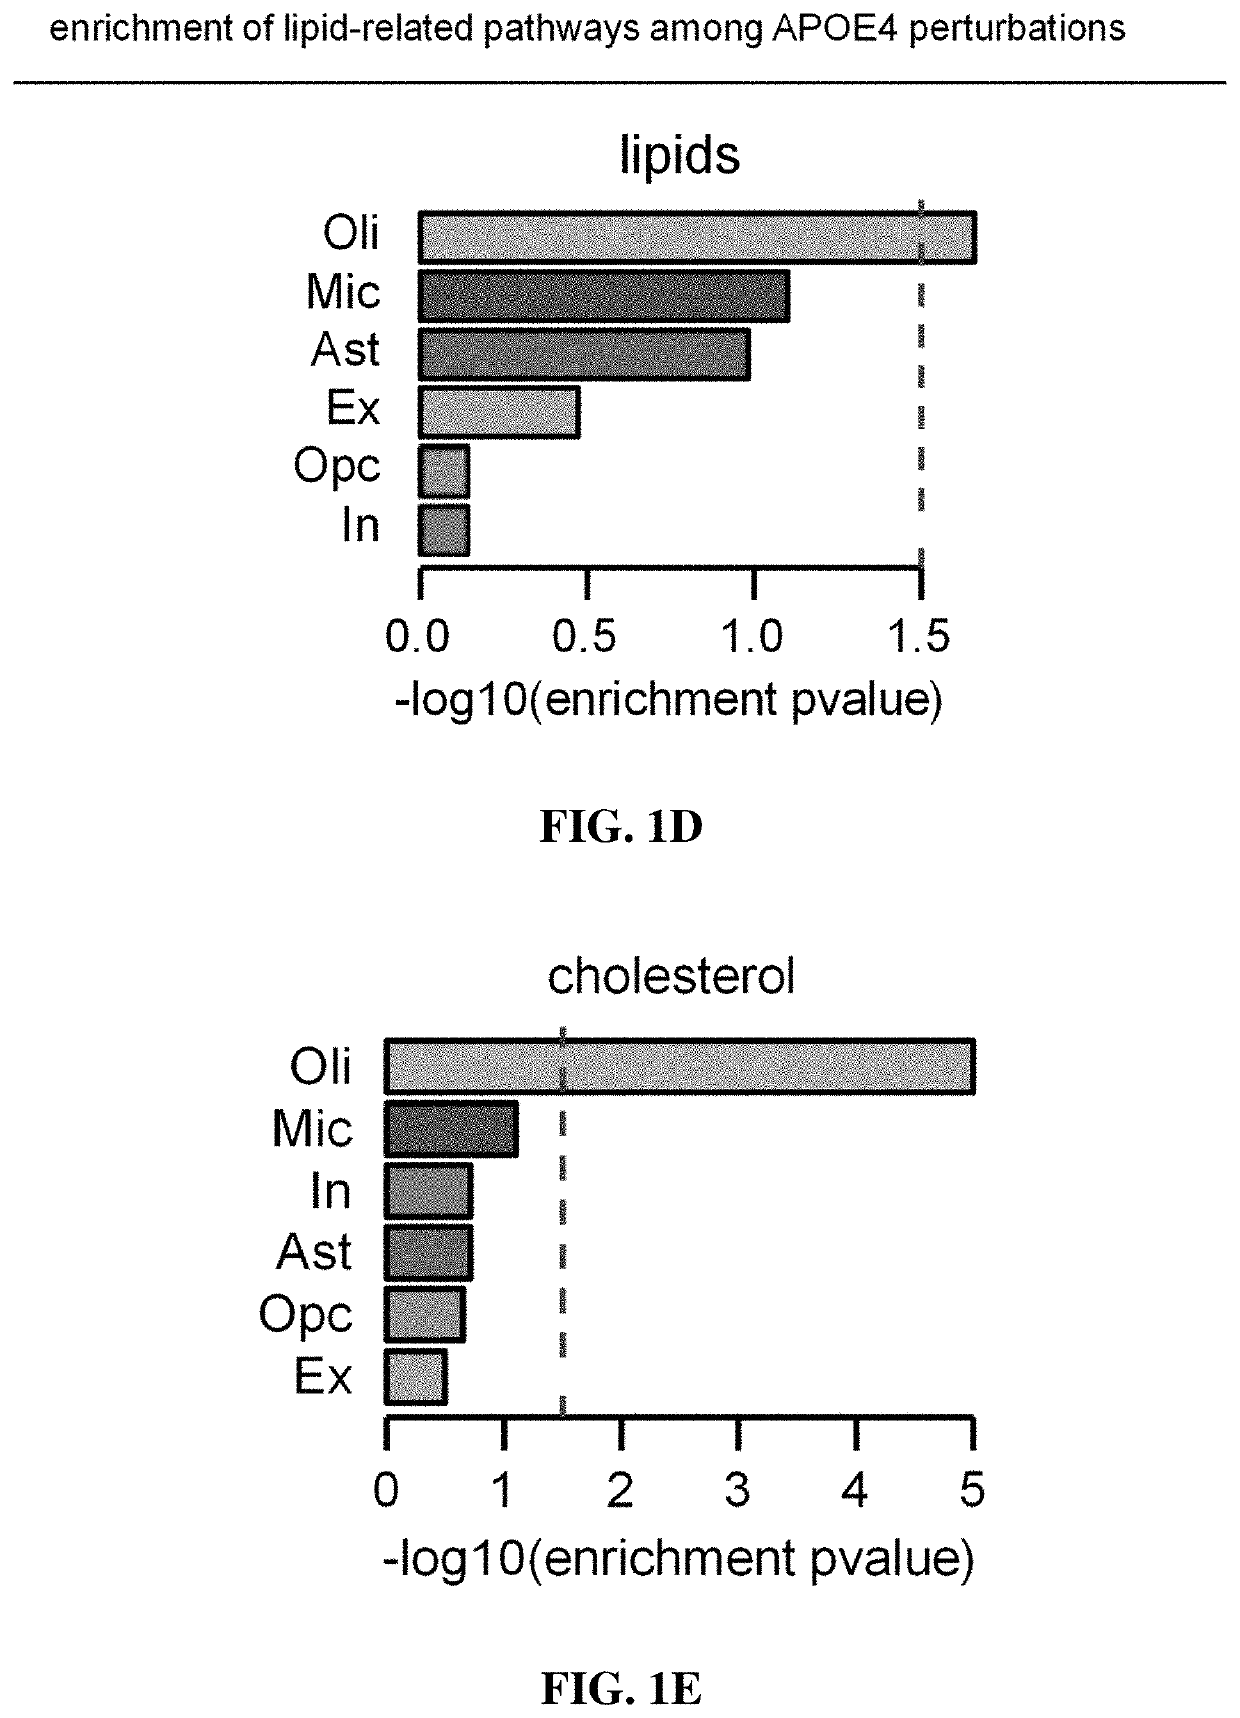 Apoe4 impairs myelination via altered cholesterol biosynthesis and transport in oligodendroglia